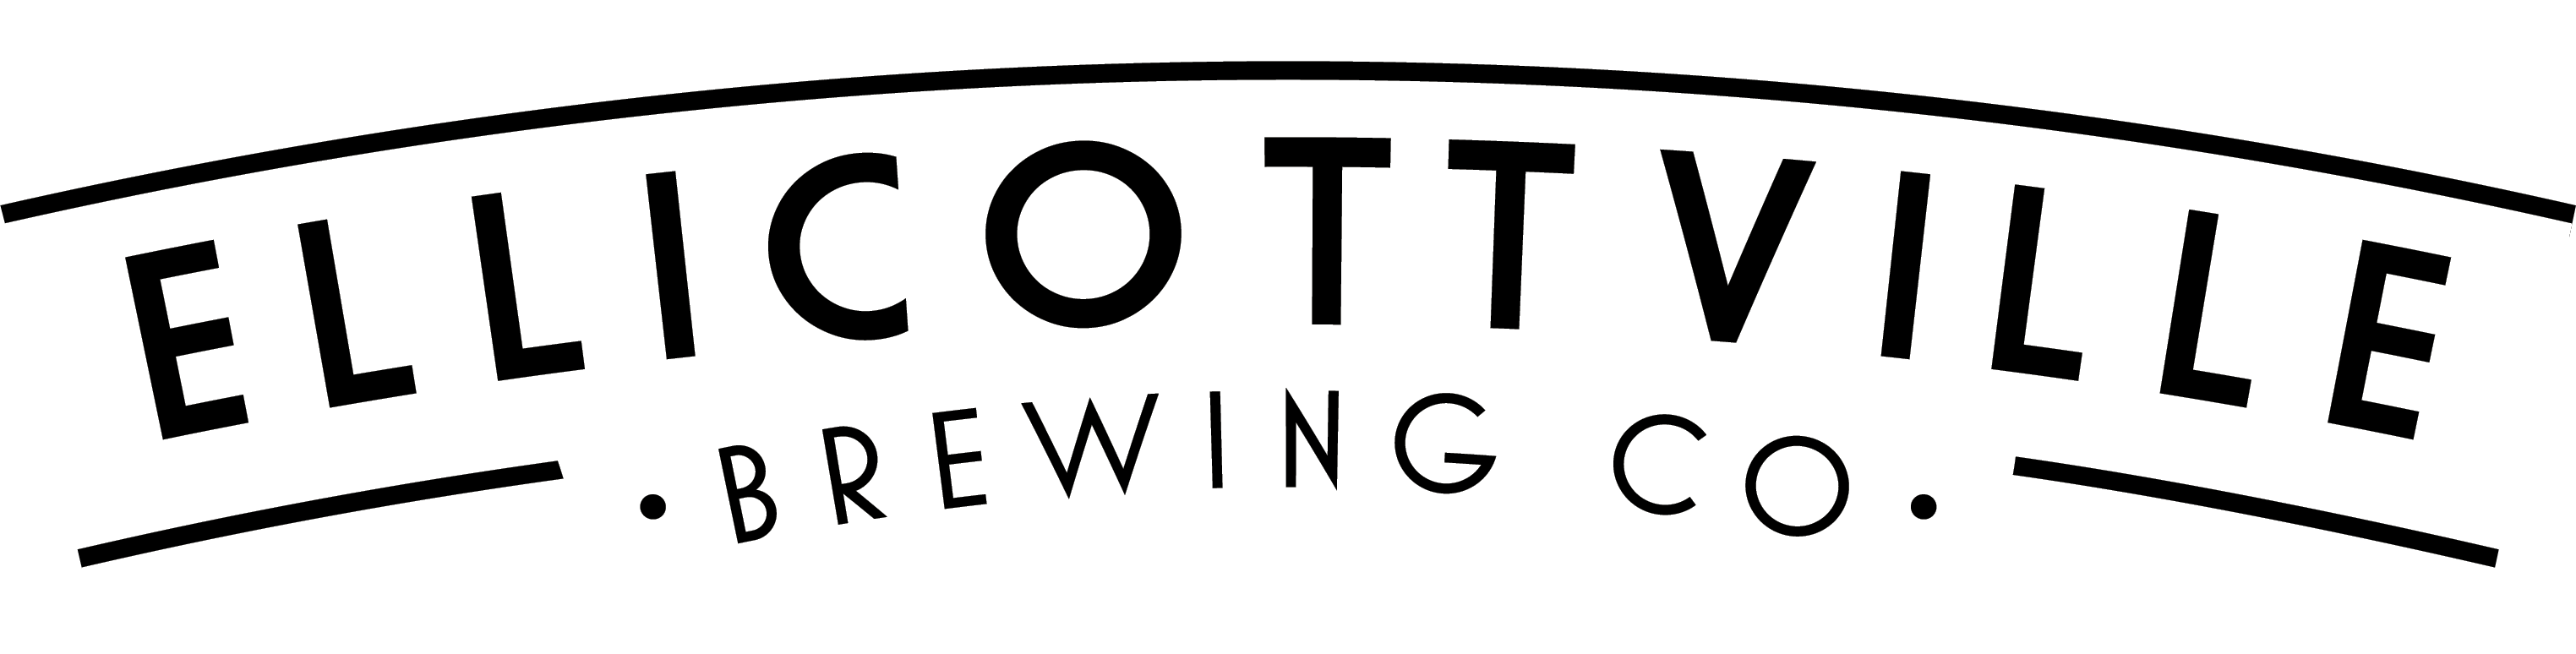 Ellicottville Brewing Company logo - Buffalocal